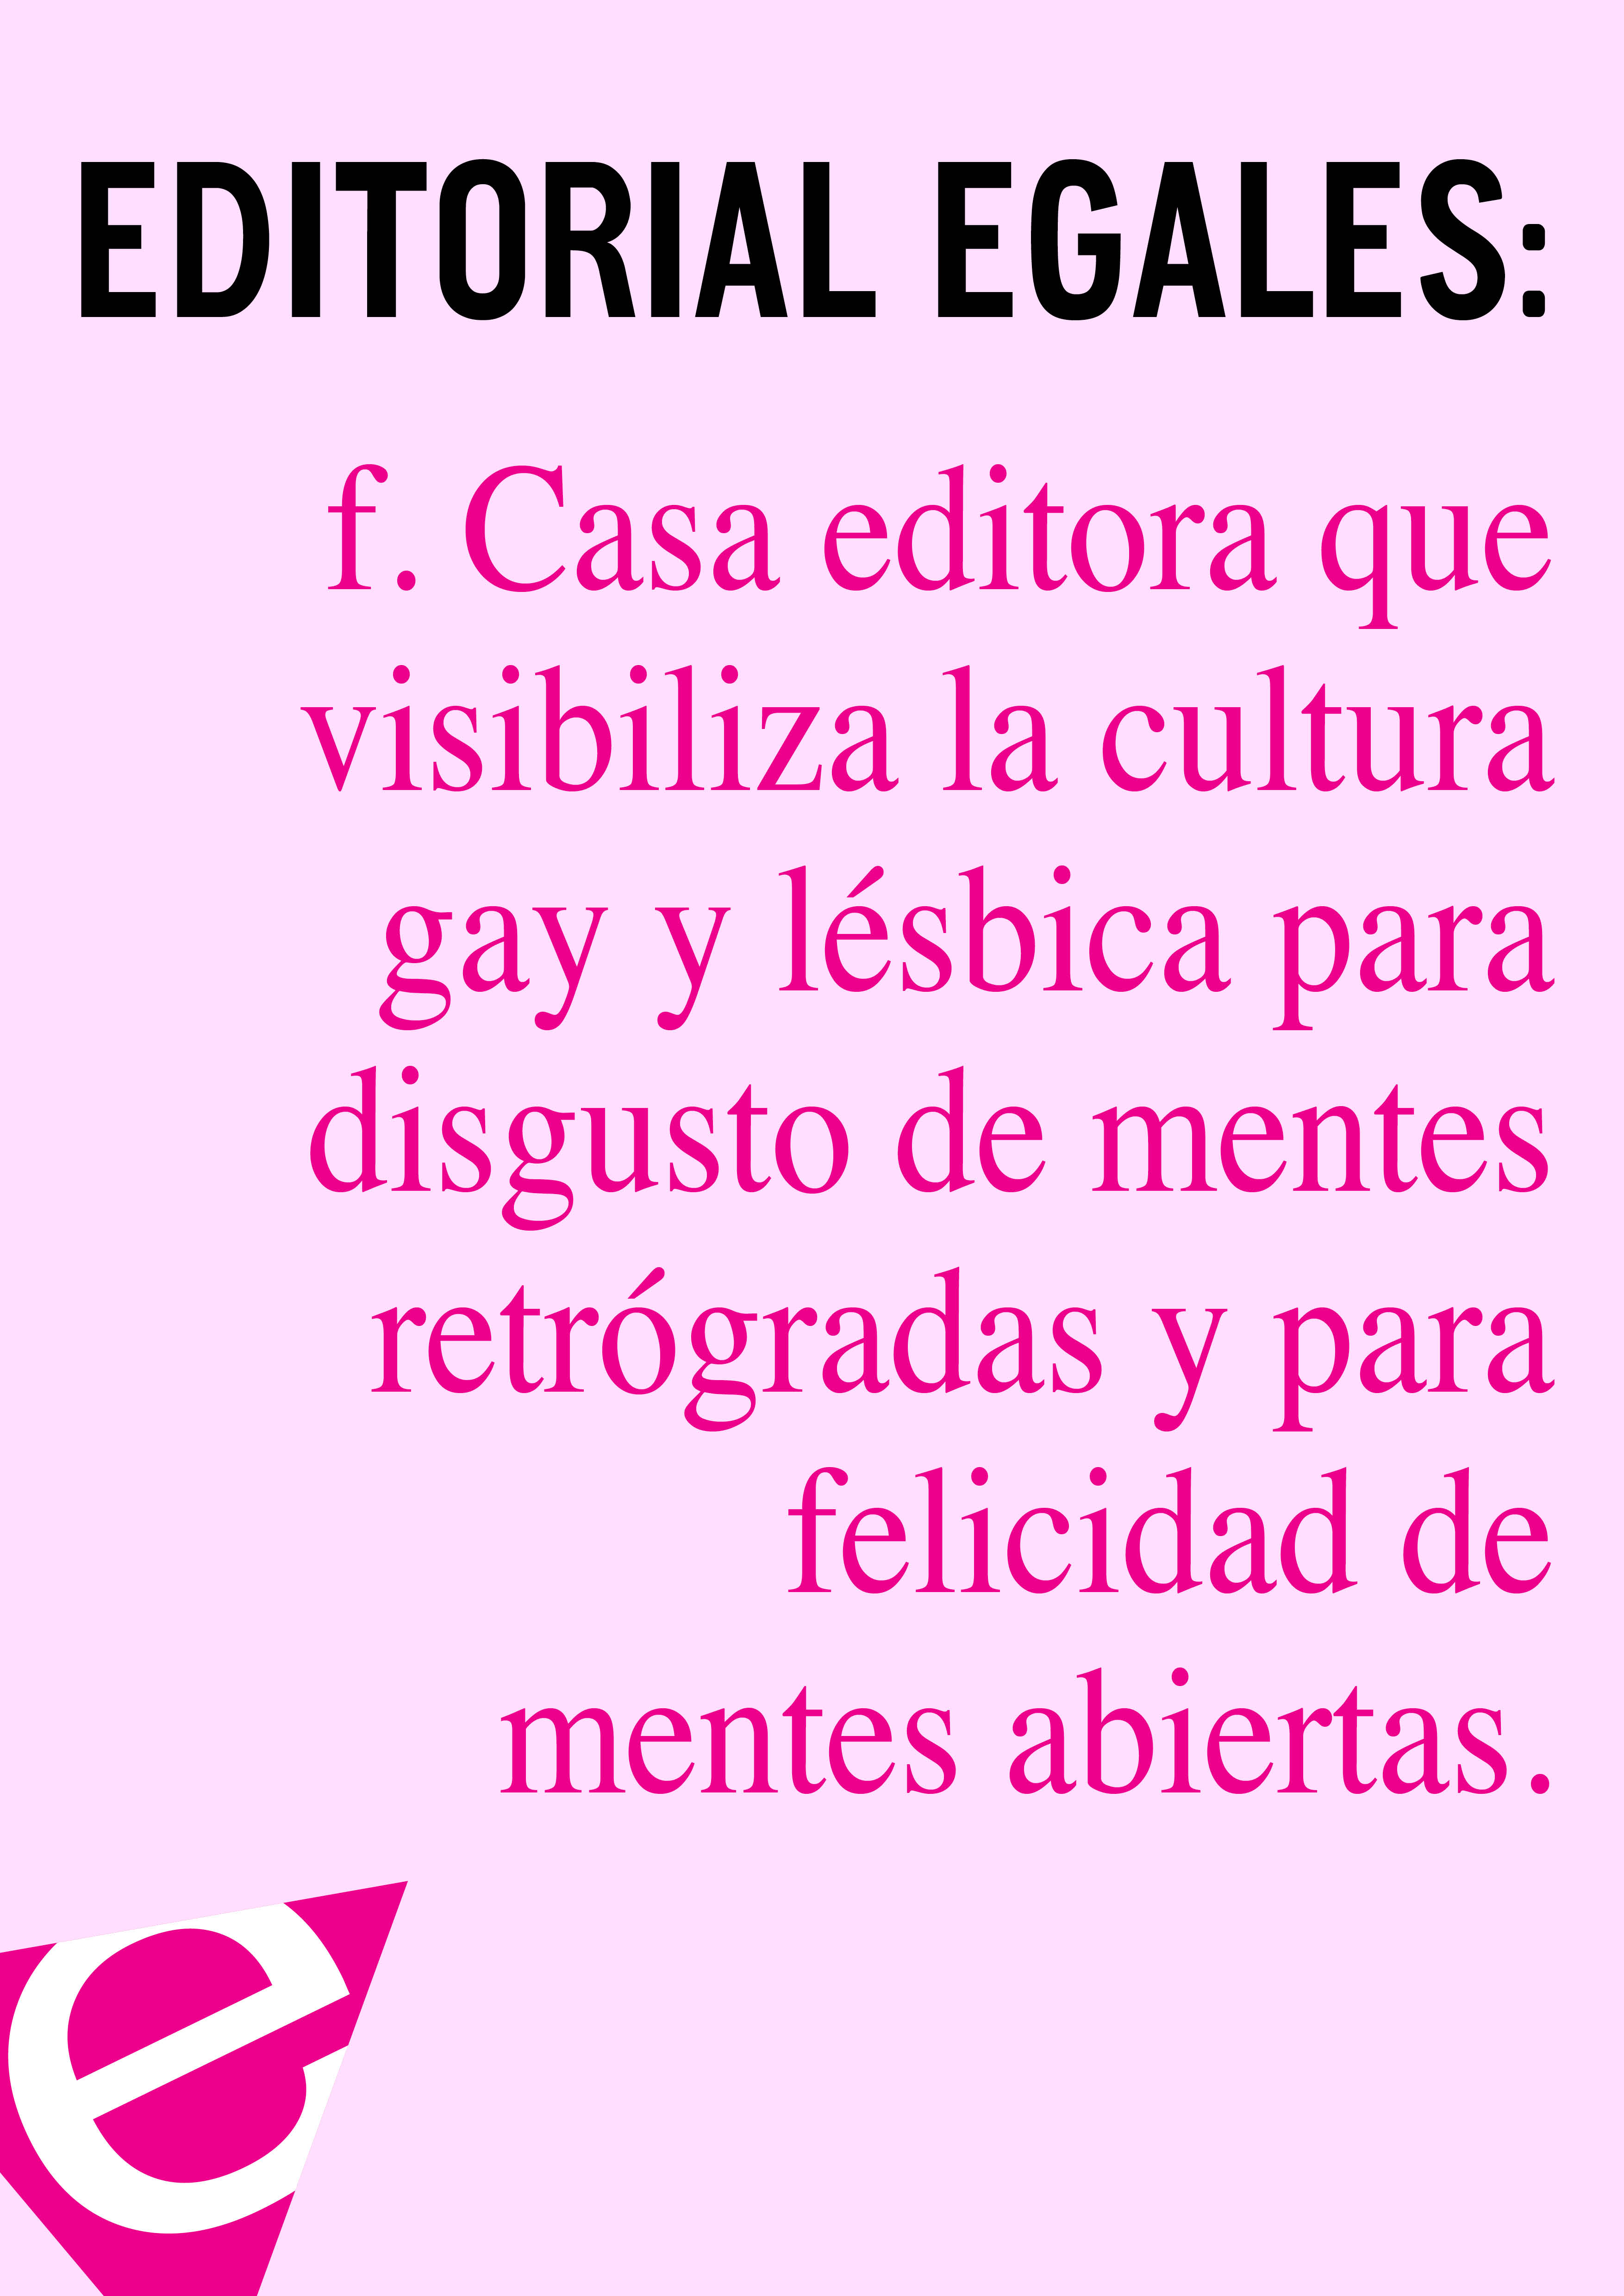 La homofobia se cura leyendo por Eva Orue. www.infolibre.com